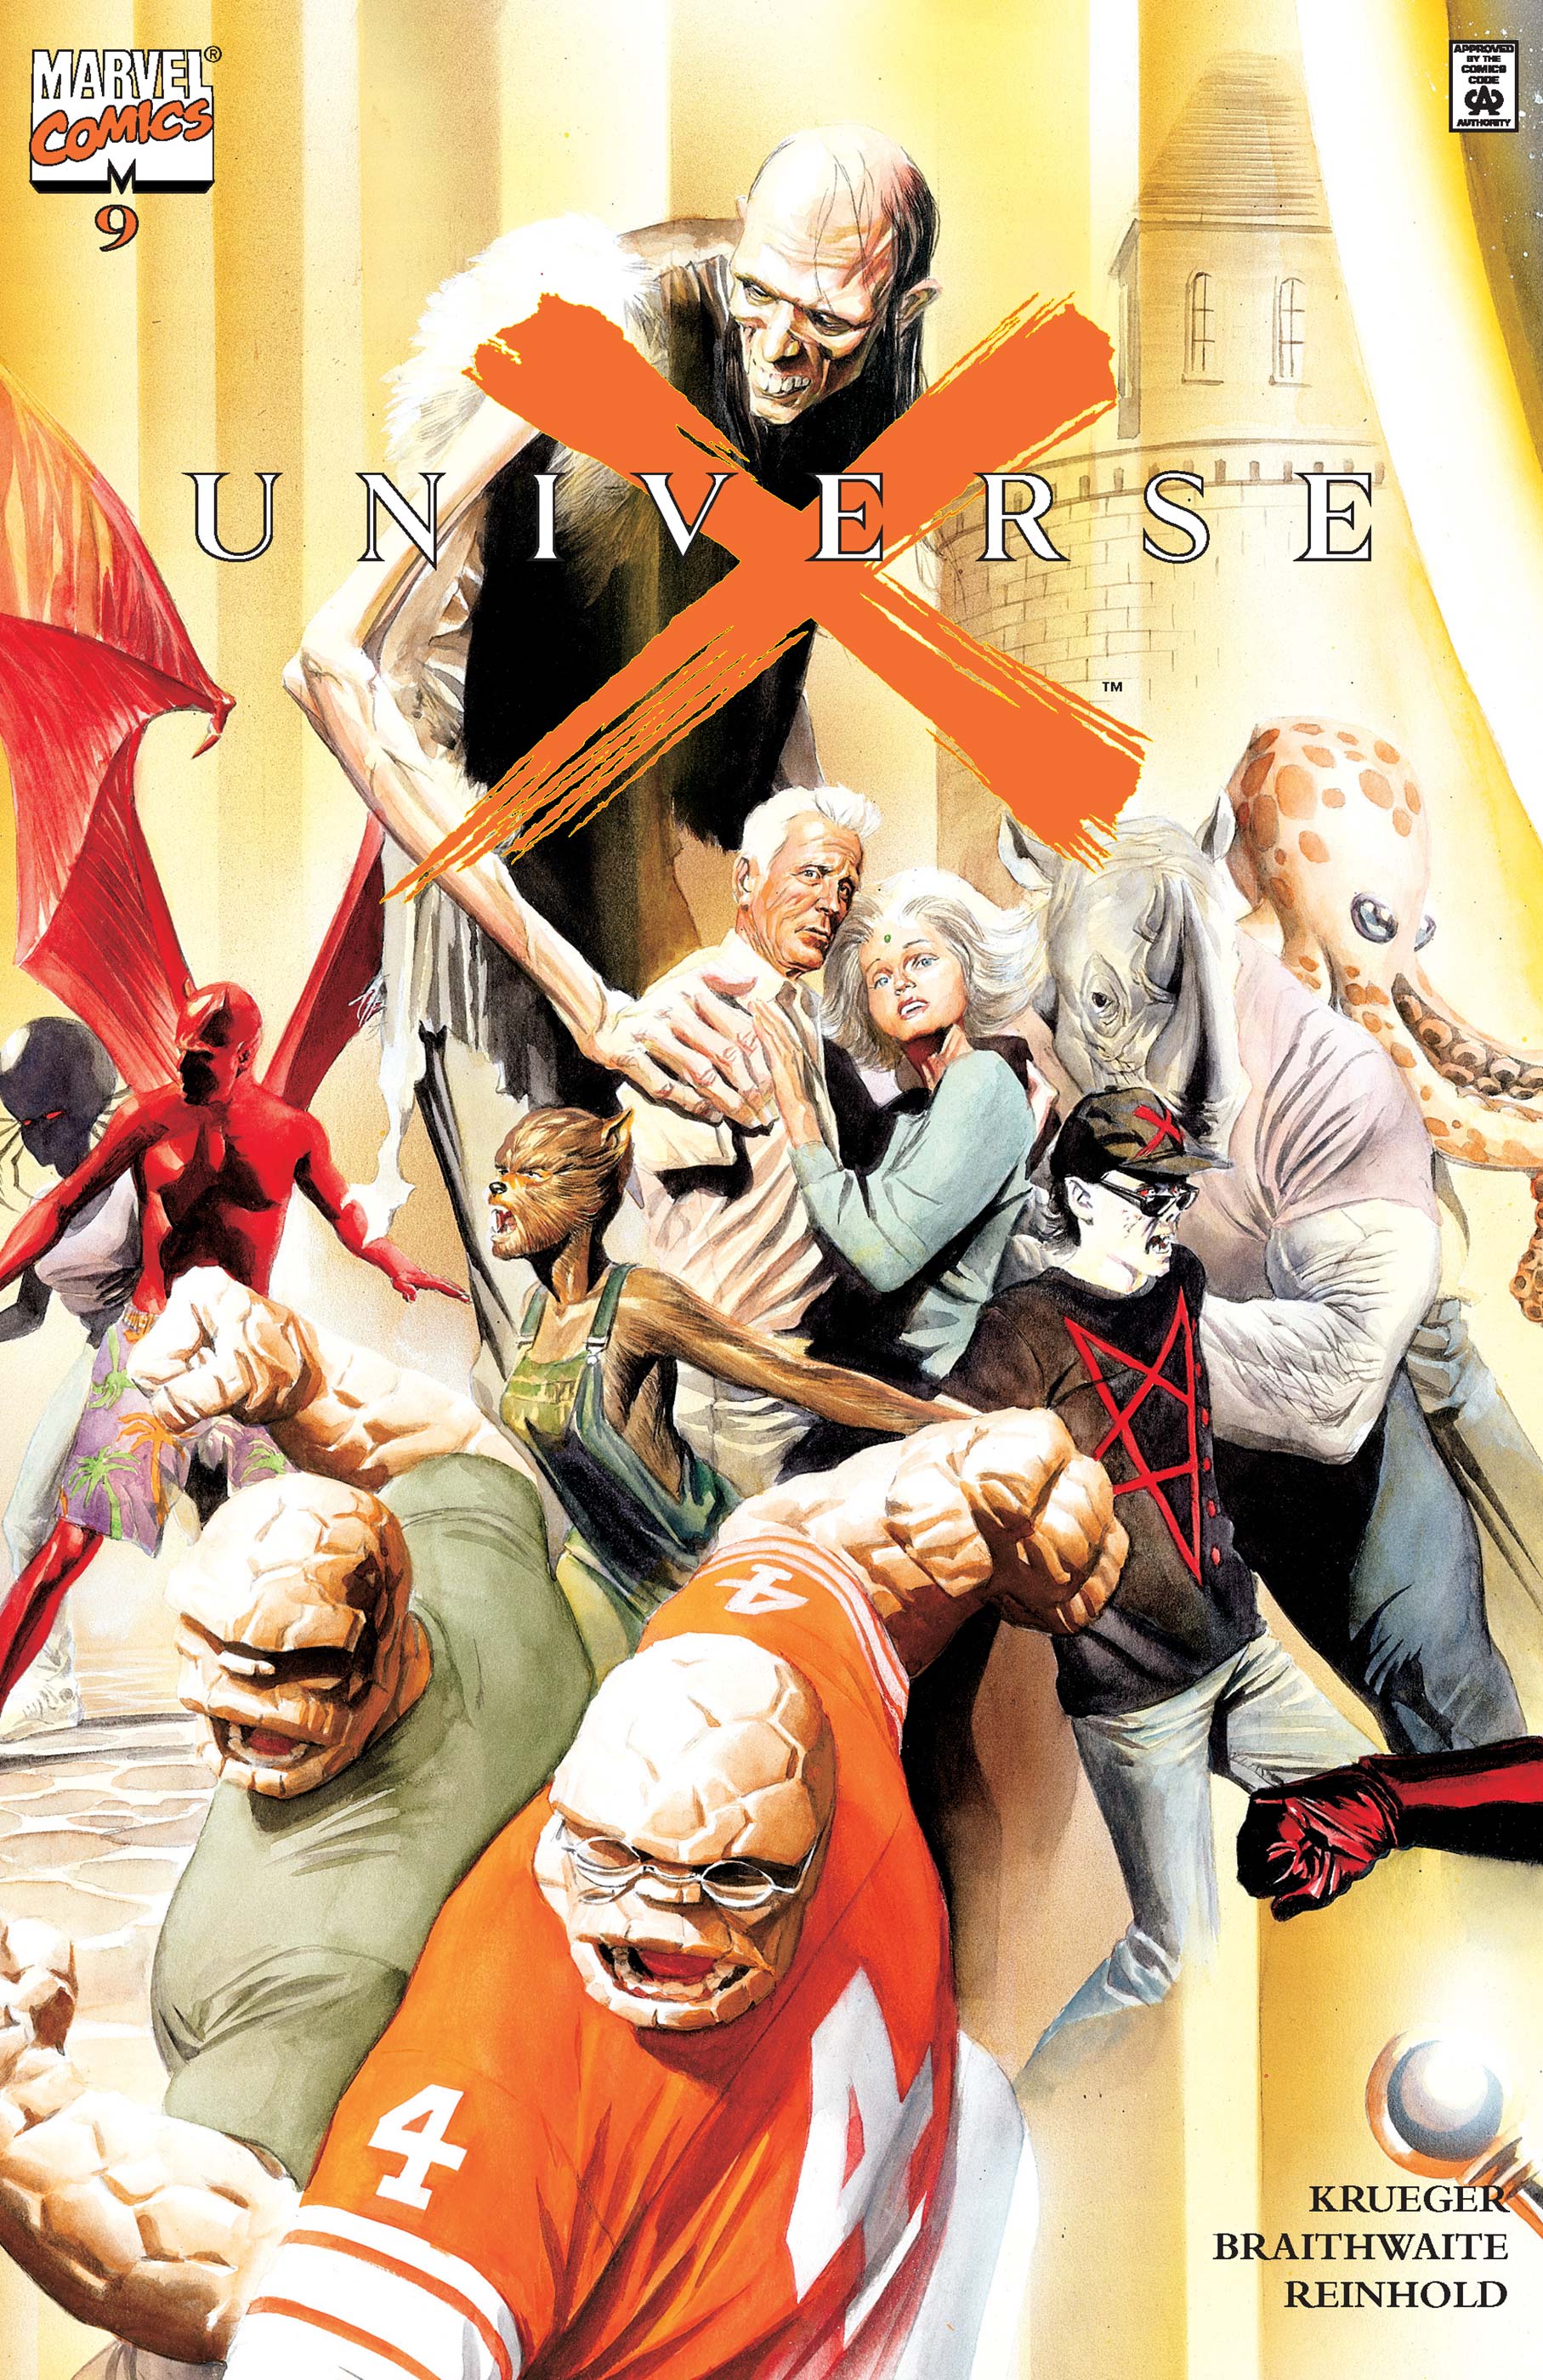 UNIVERSE X OMNIBUS UNIVERSE X #9#10#11#12 UNIVERSE X: BEASTS  - MARVEL COMICS (2001)